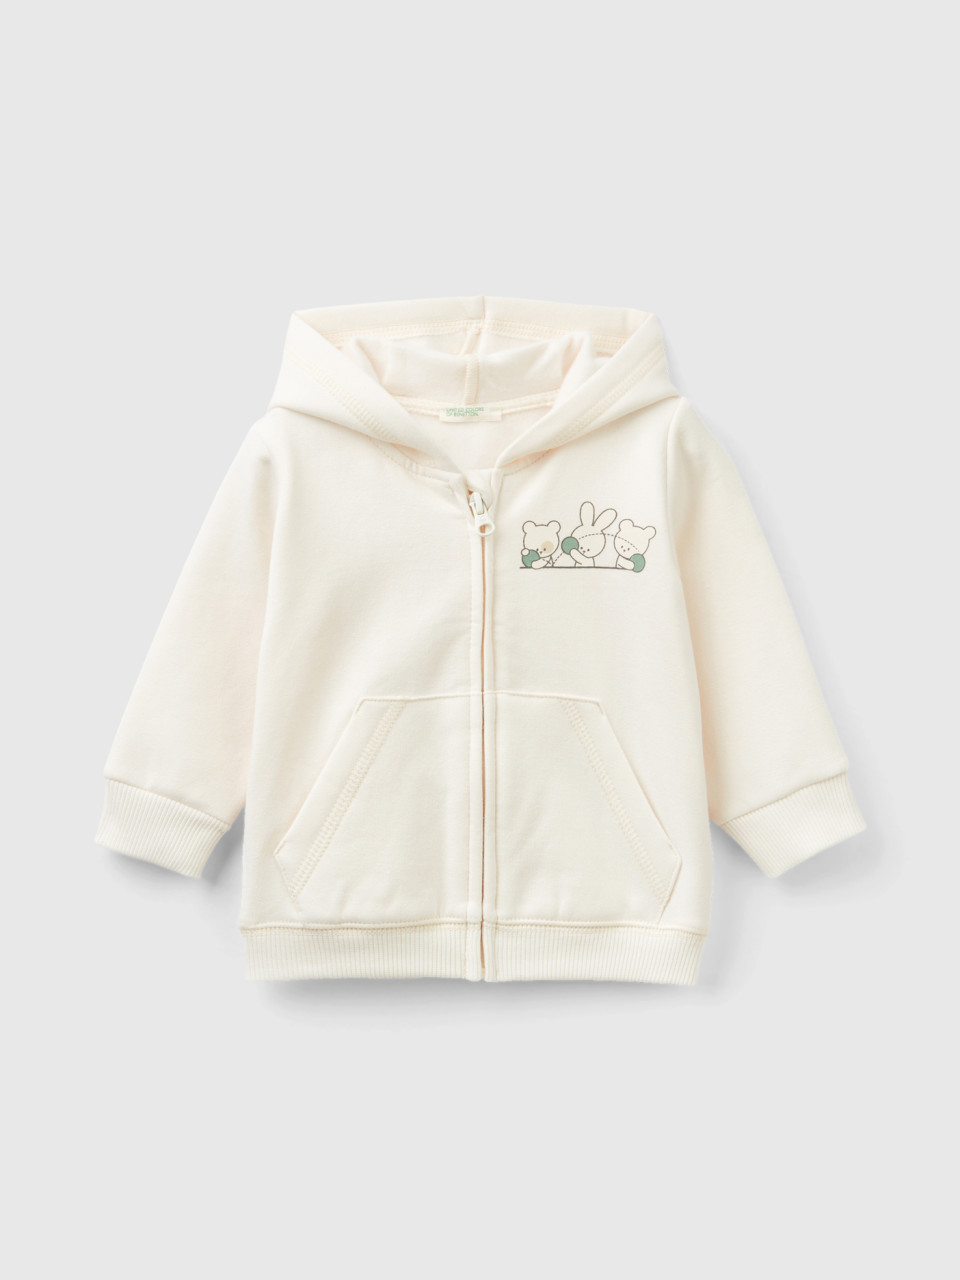 Benetton, Warm Sweatshirt With Animal Print, Creamy White, Kids